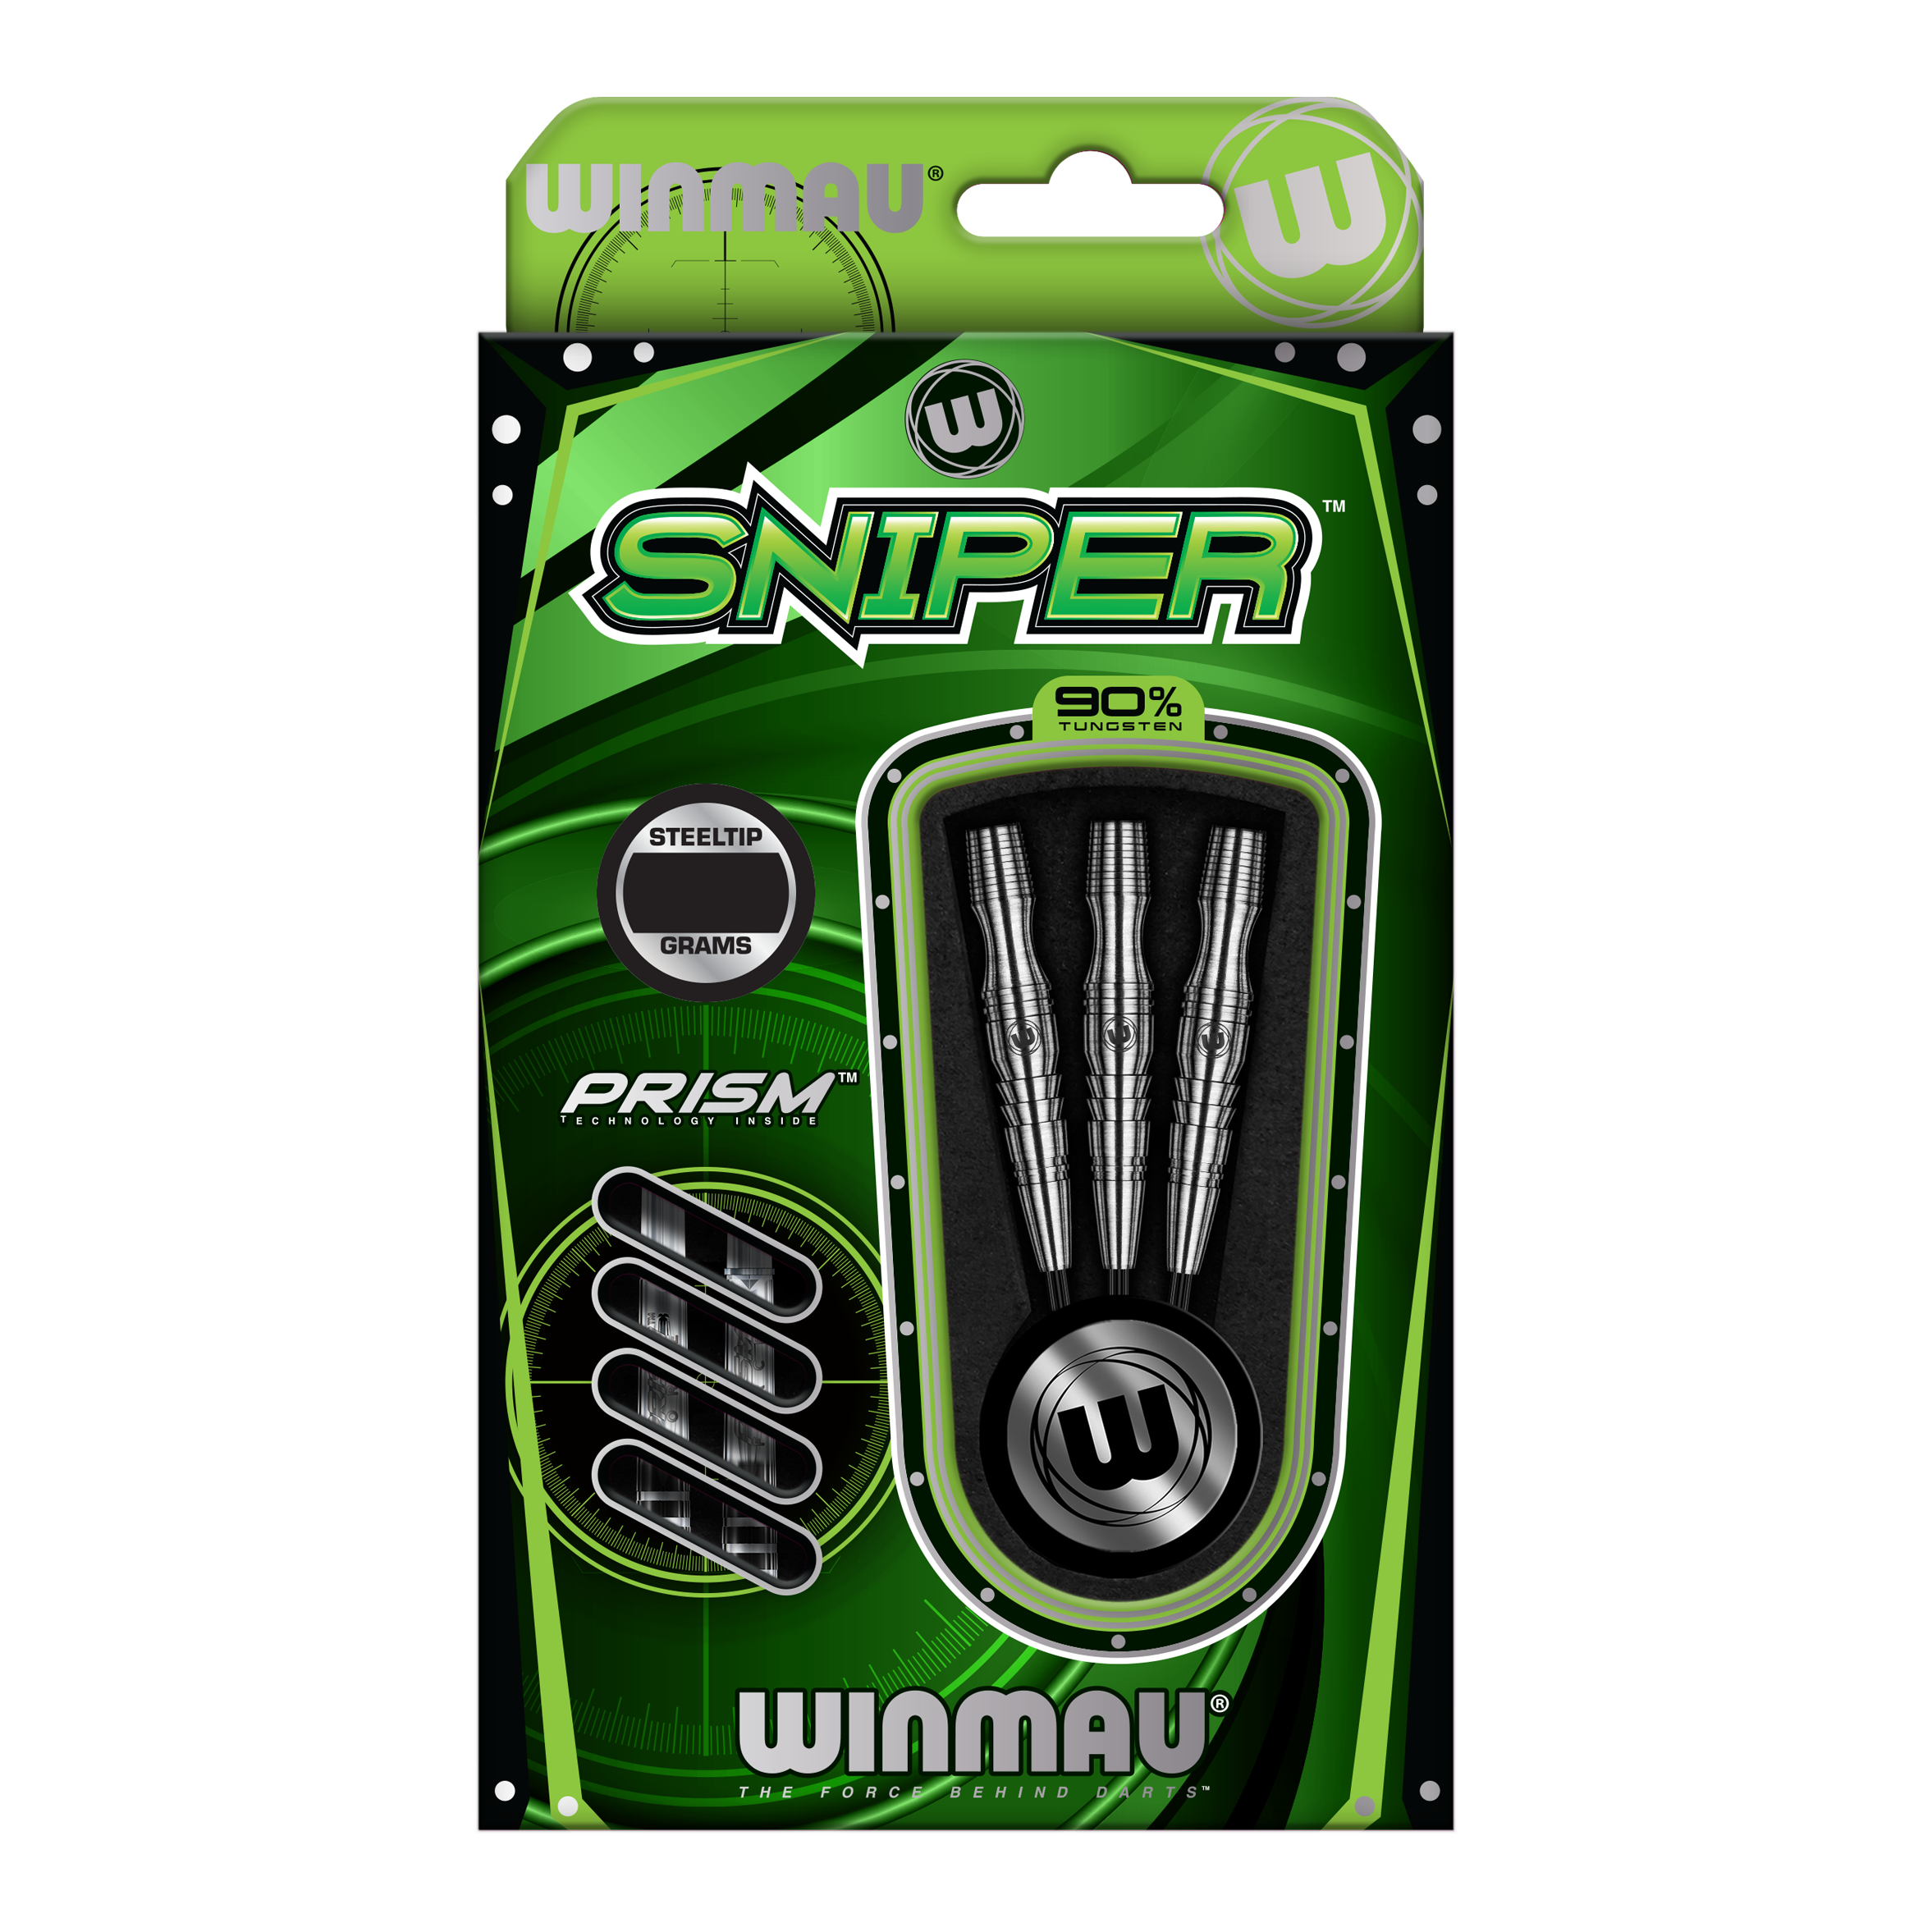 Winmau Sniper V3 steel darts